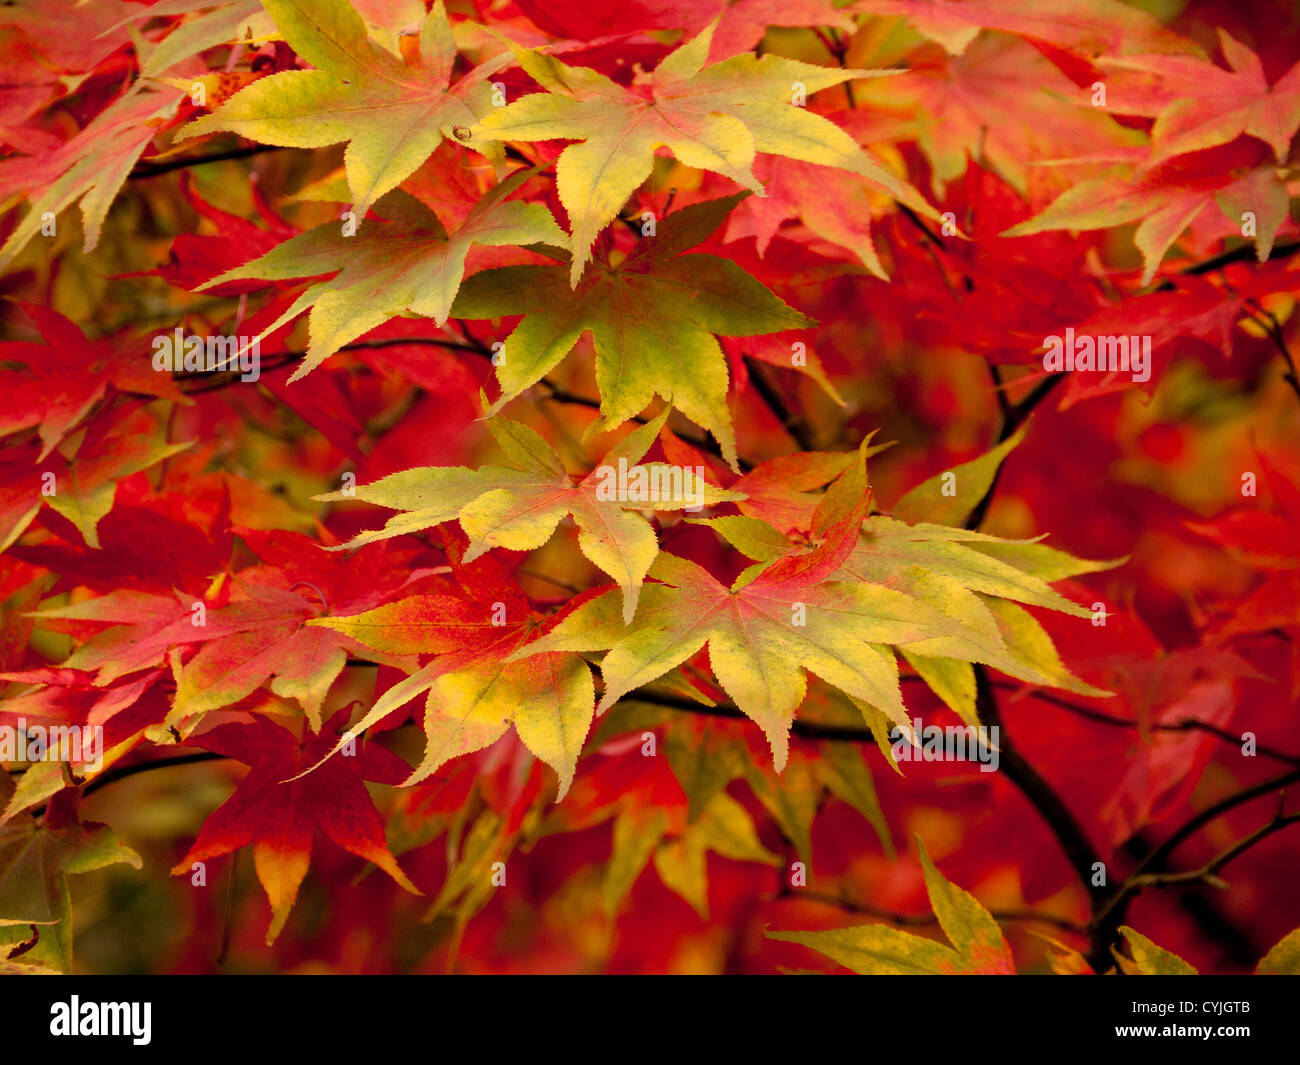 Acer leaves, common name Maple, in full Autumn colour in Winkworth Arboretum, Surrey, UK Stock Photo